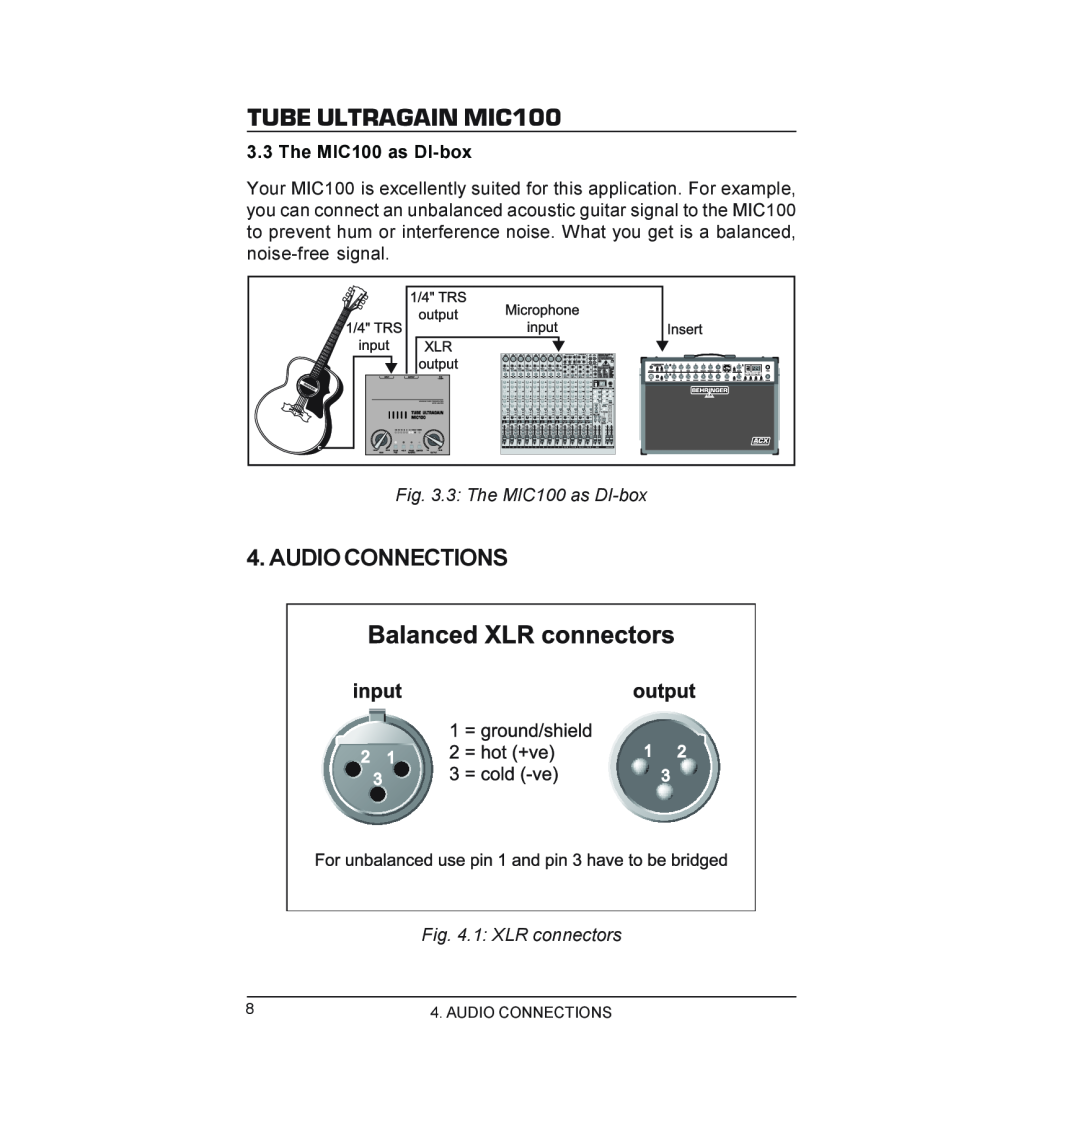 Behringer manual Audio Connections, 3 The MIC100 as DI-box, 1 XLR connectors, TUBE ULTRAGAIN MIC100 